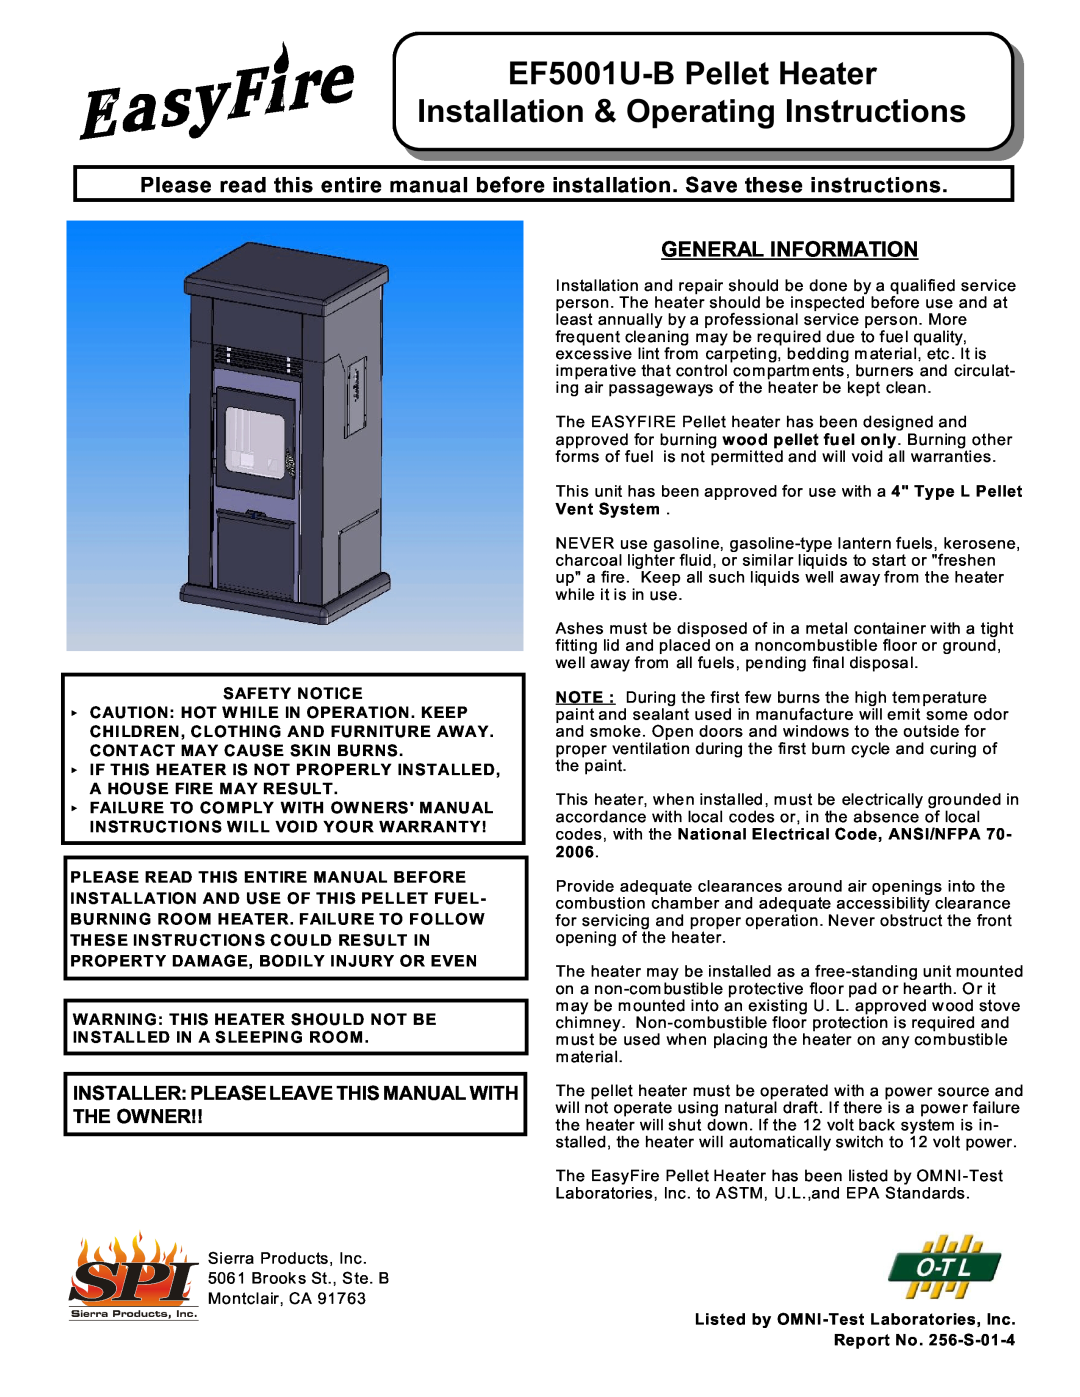 Sierra Products EF-5001UB owner manual General Information, EF5001U-BPellet Heater, Installation & Operating Instructions 